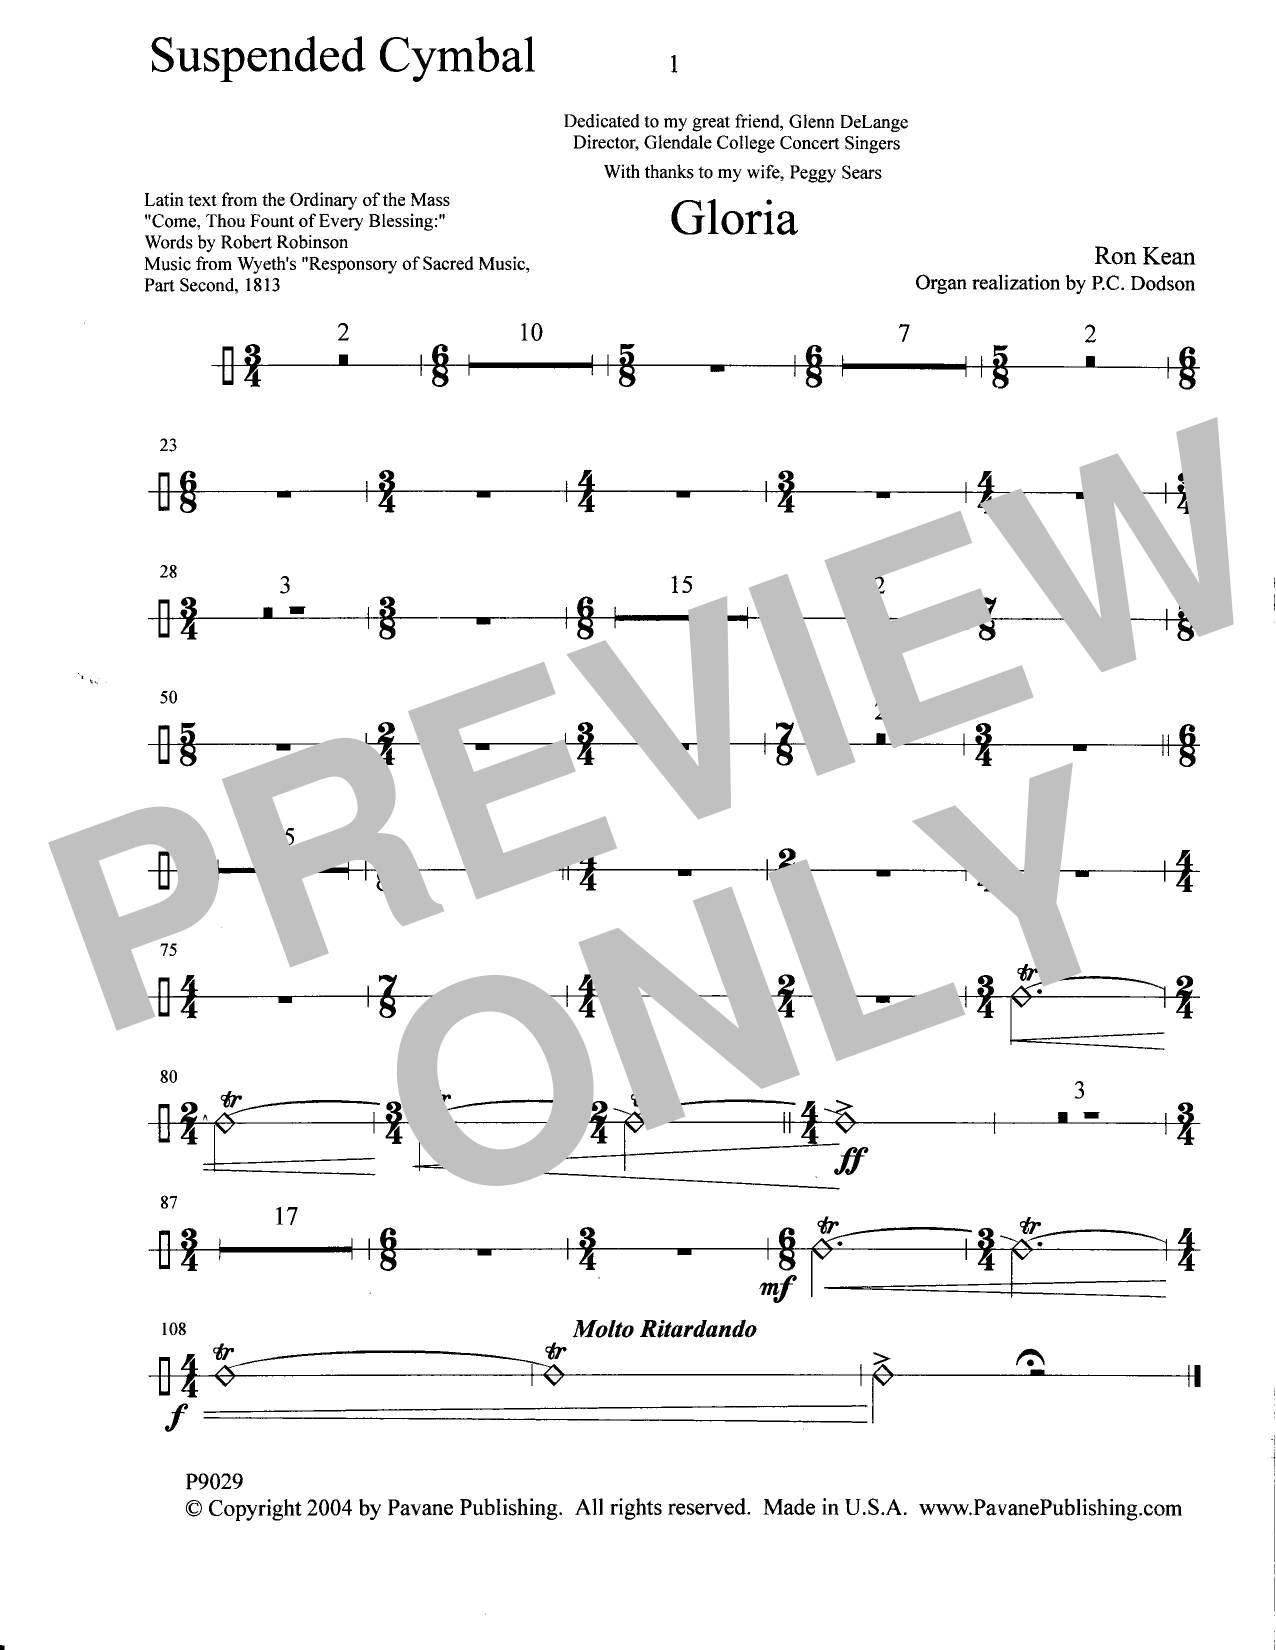 Ron Kean Gloria - Suspended Cymbal Sheet Music Notes & Chords for Choir Instrumental Pak - Download or Print PDF